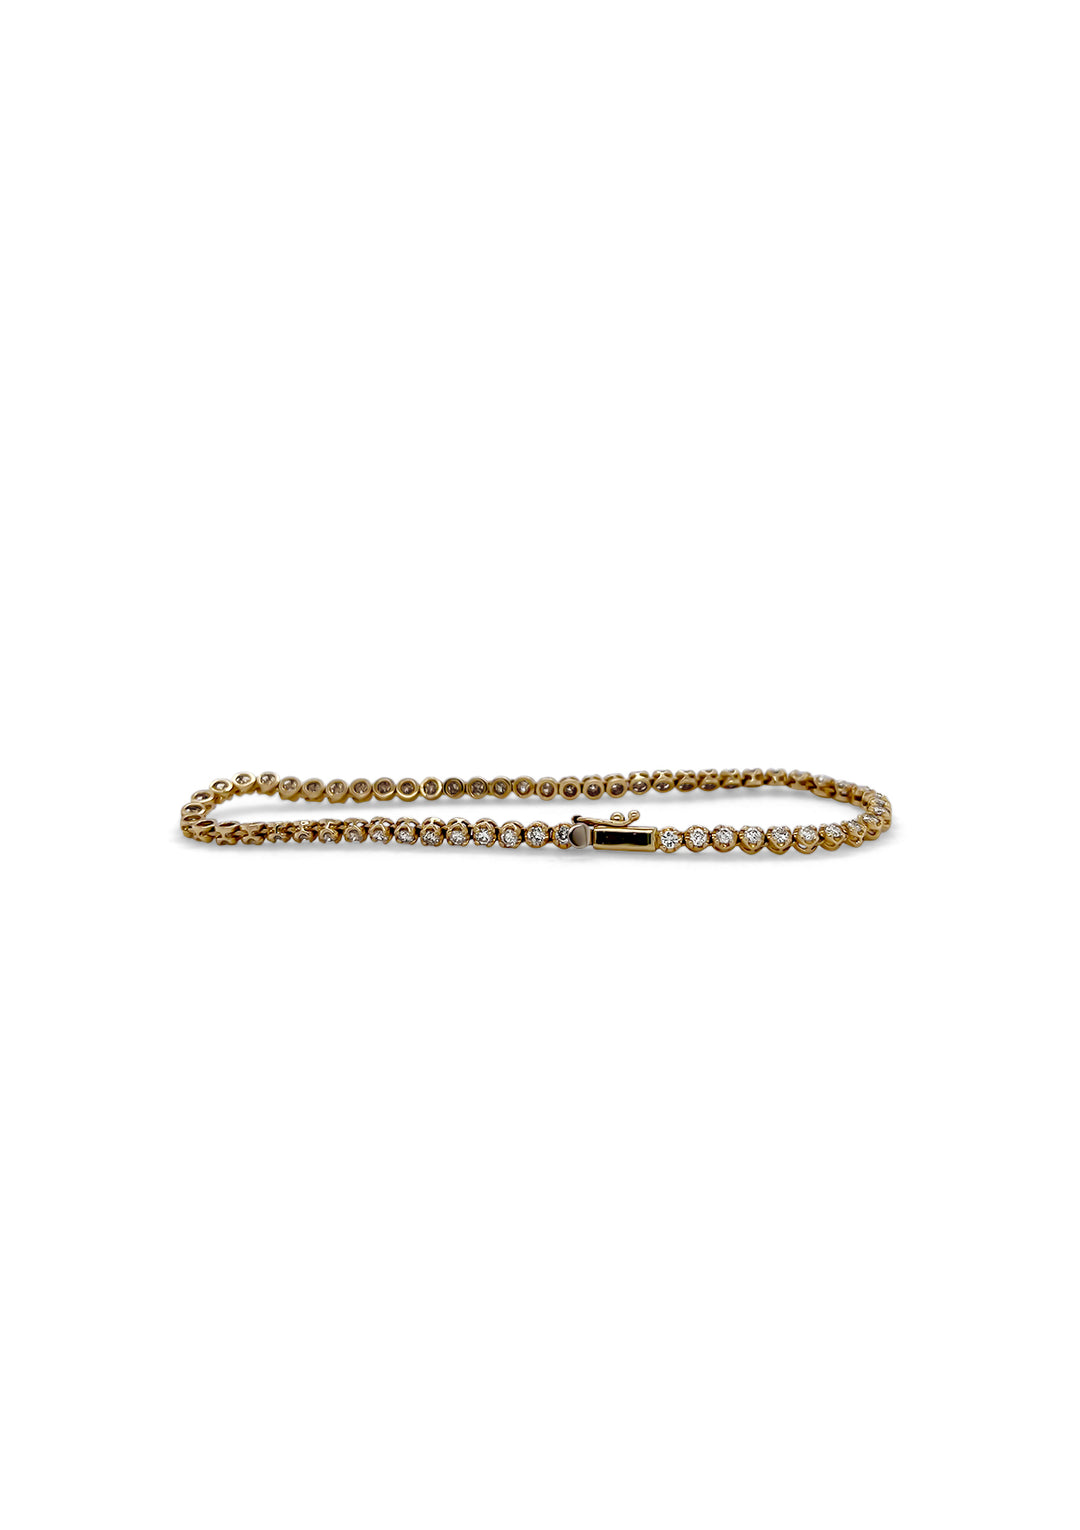 14K Yellow Gold 1.83 Carat Diamond Tennis Bracelet